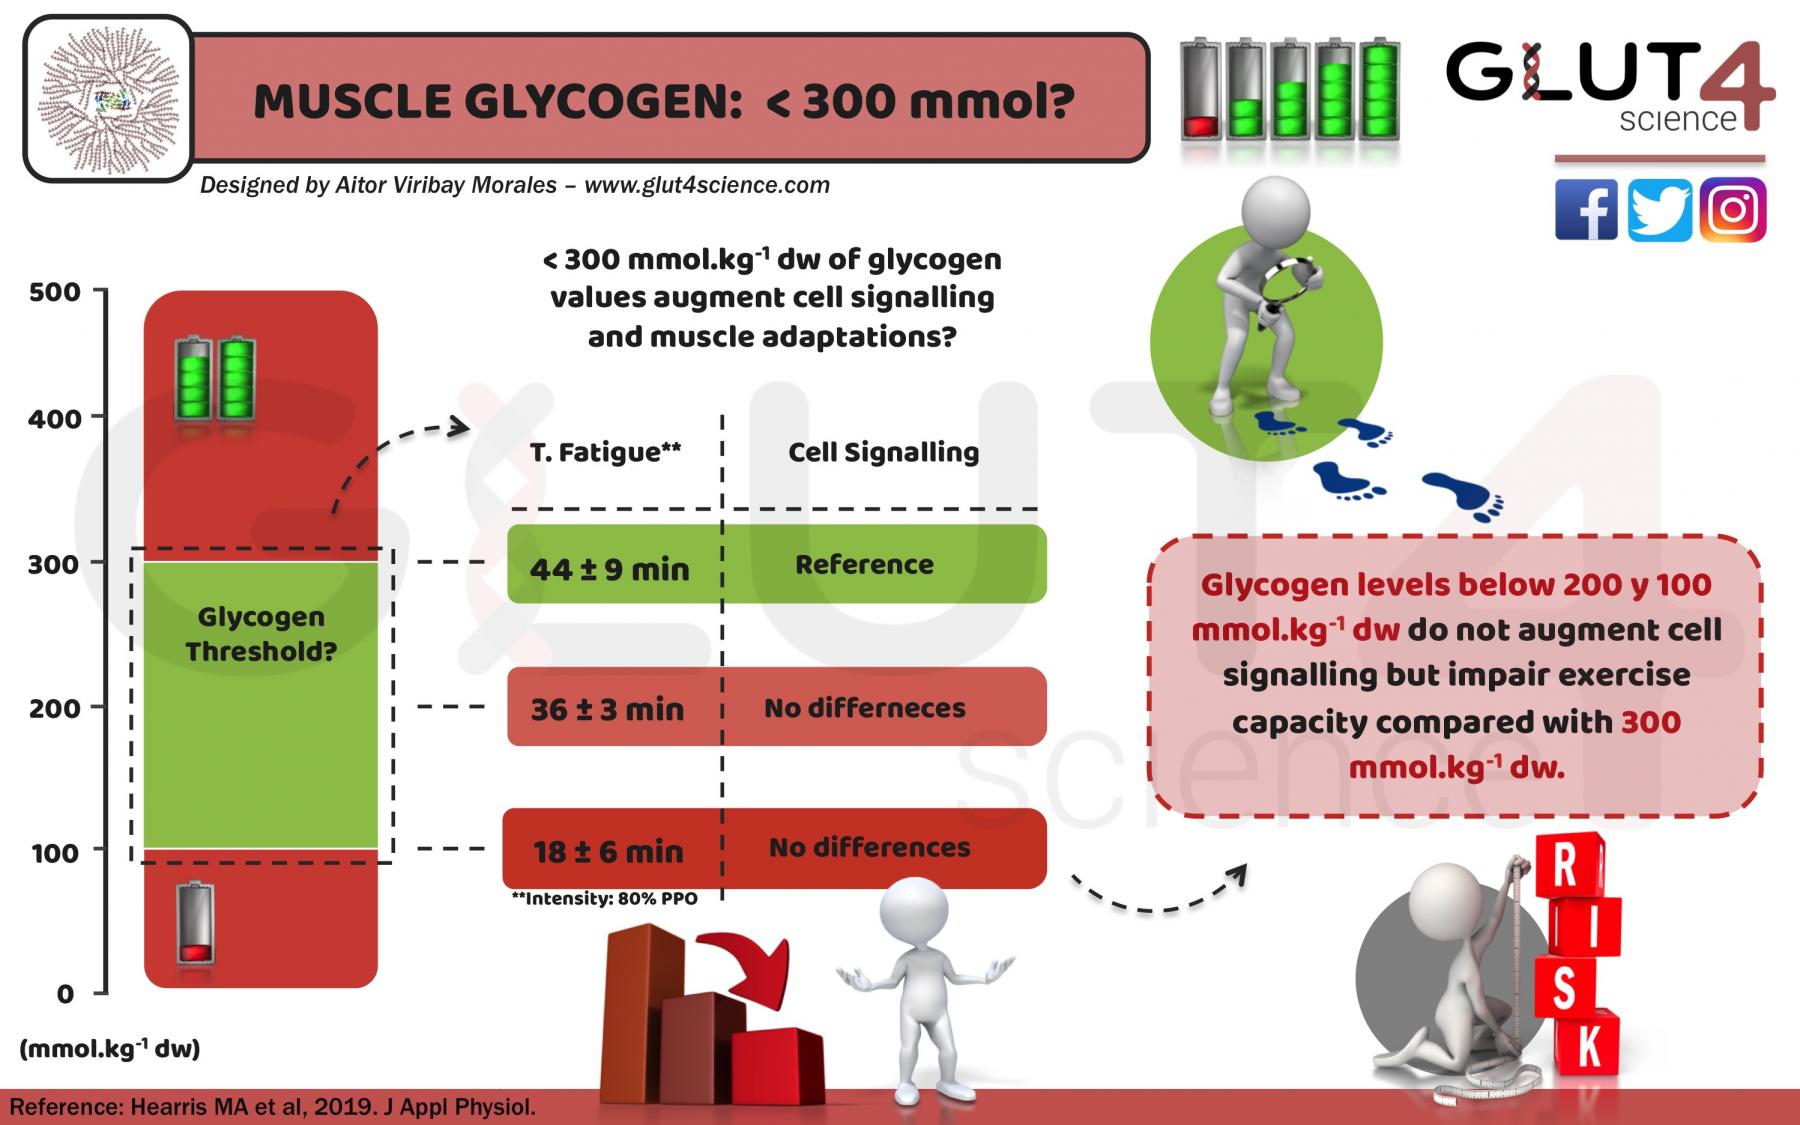 Glycogen <300mmol: Cell Signalling